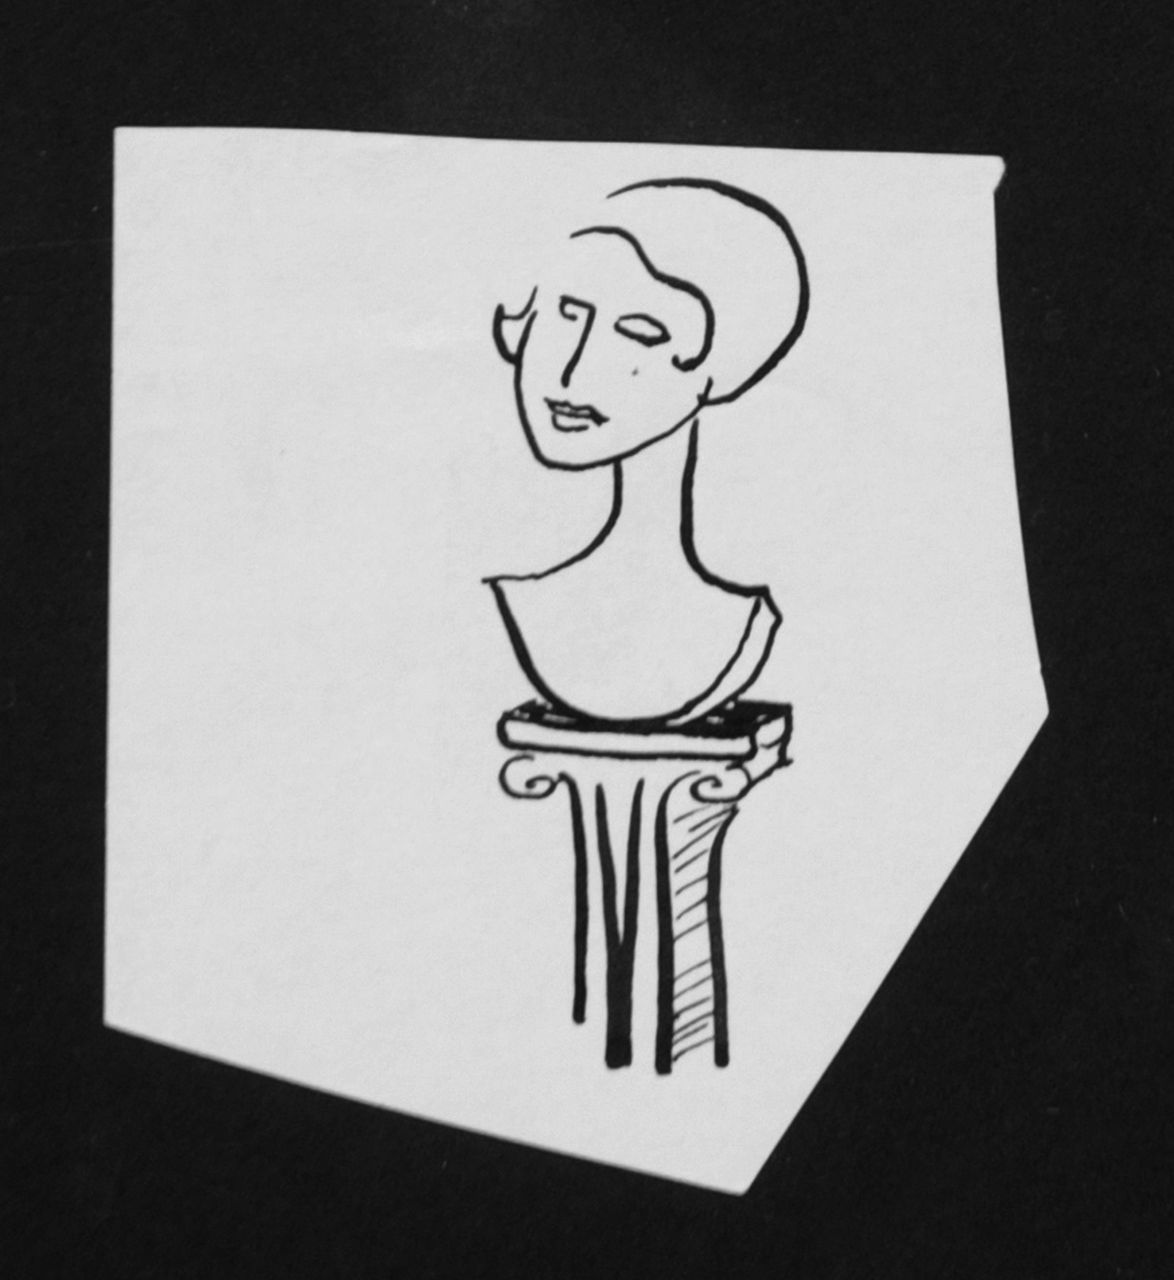 Oranje-Nassau (Prinses Beatrix) B.W.A. van | Beatrix Wilhelmina Armgard van Oranje-Nassau (Prinses Beatrix), Sculpture, pencil and black ink on paper 8.2 x 7.5 cm, executed August 1960